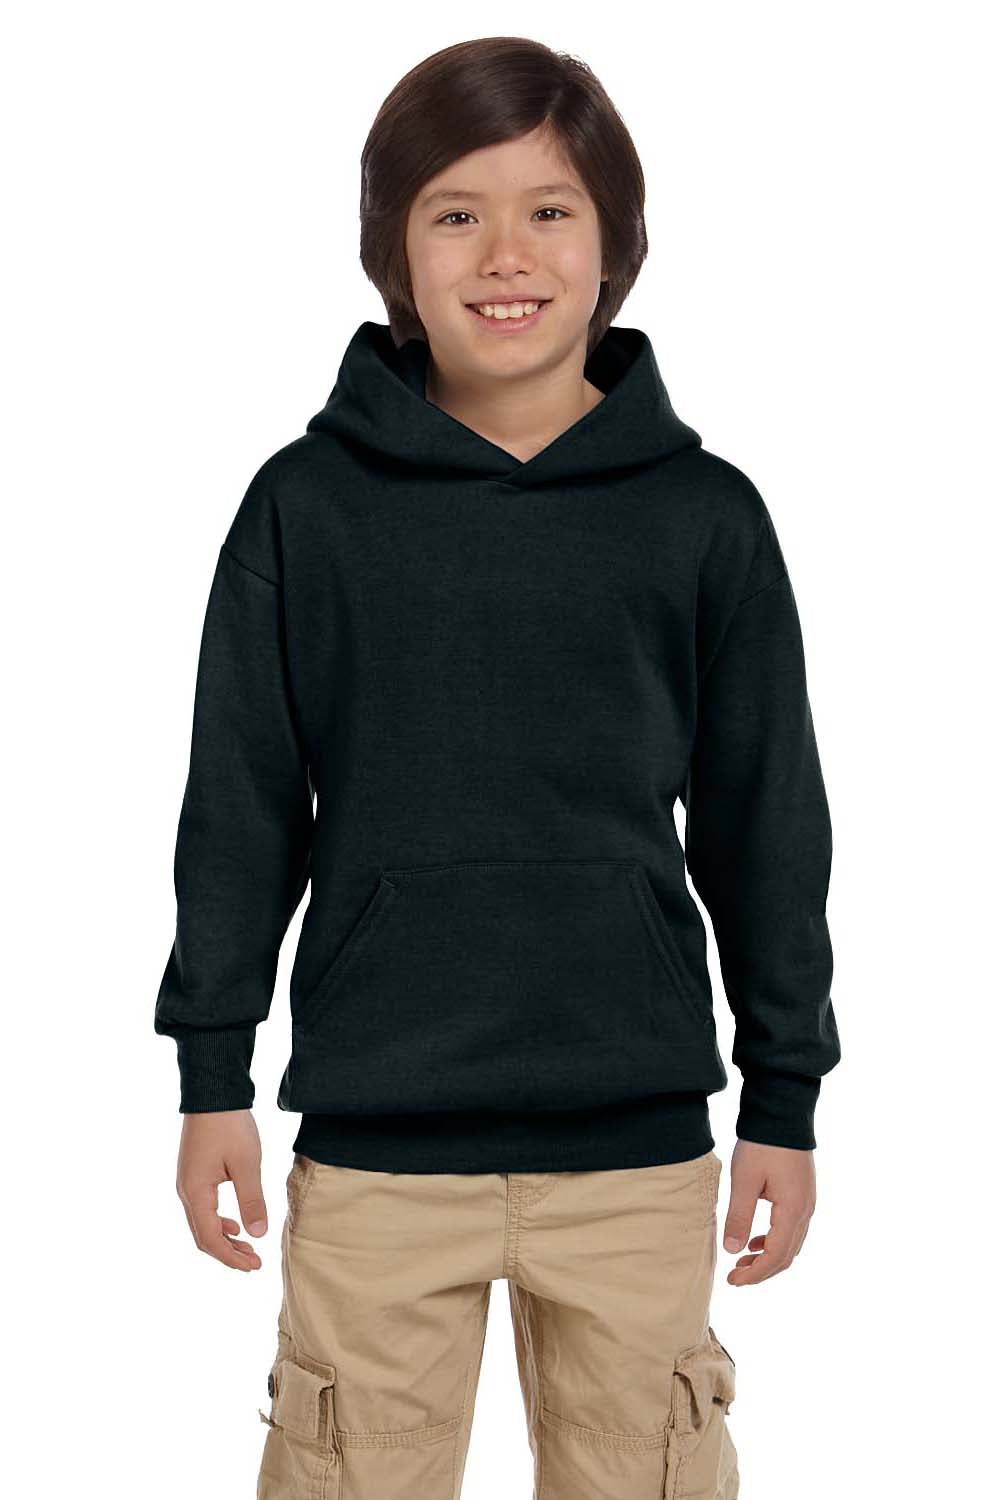 Hanes P473 Youth EcoSmart Print Pro XP Hooded Sweatshirt Hoodie Black Front